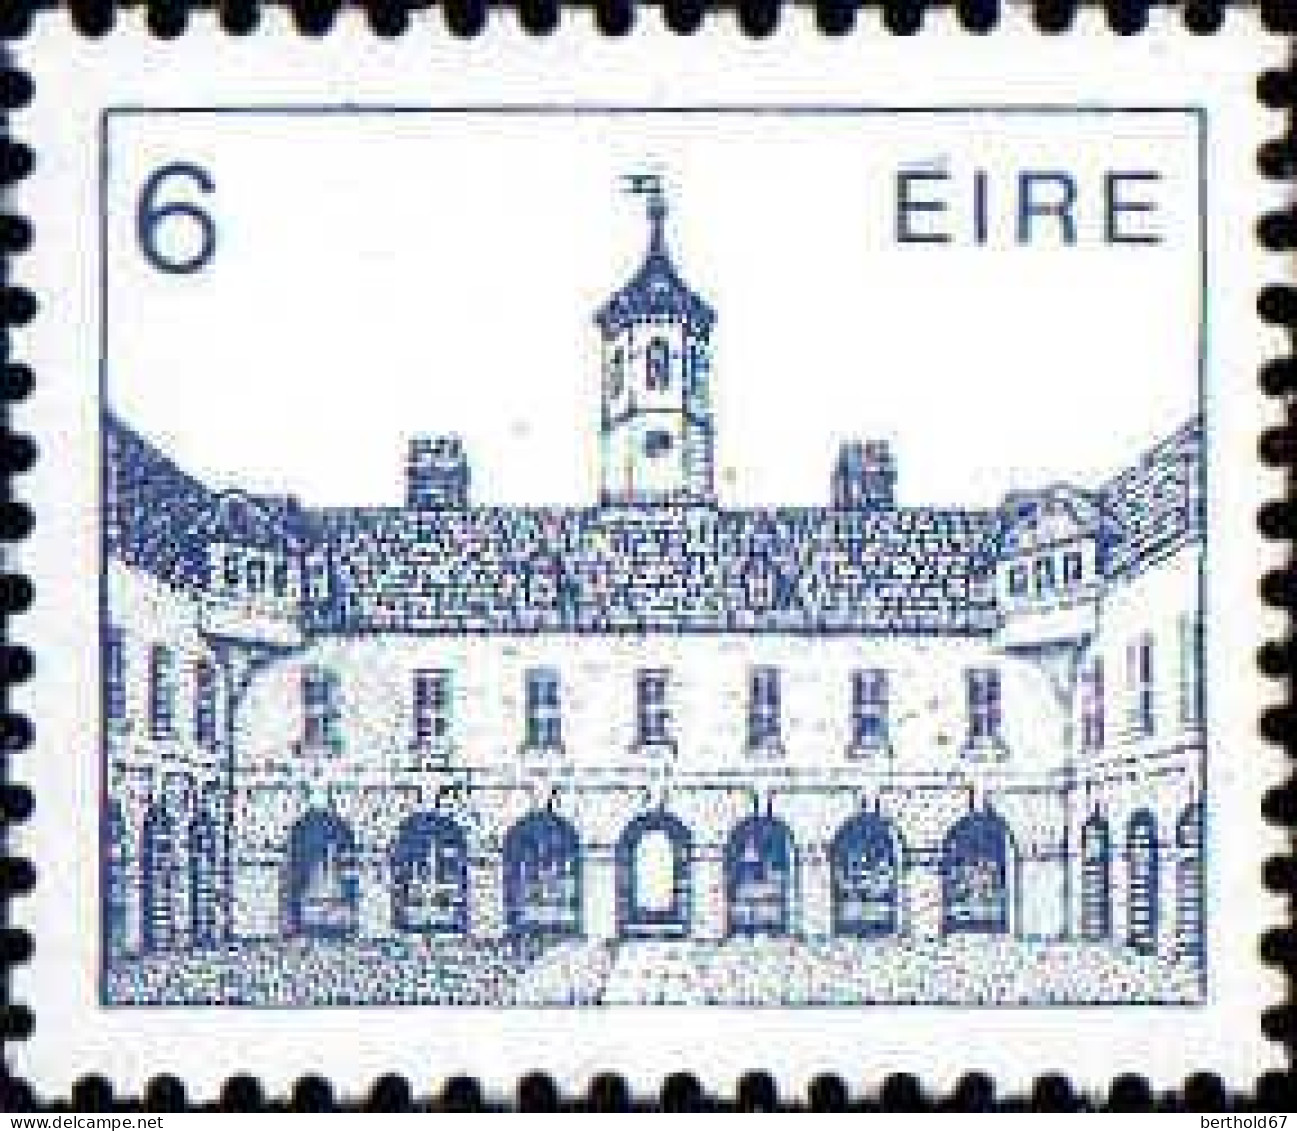 Irlande Poste N** Yv: 495/501 Architecture Irlandaise - Unused Stamps